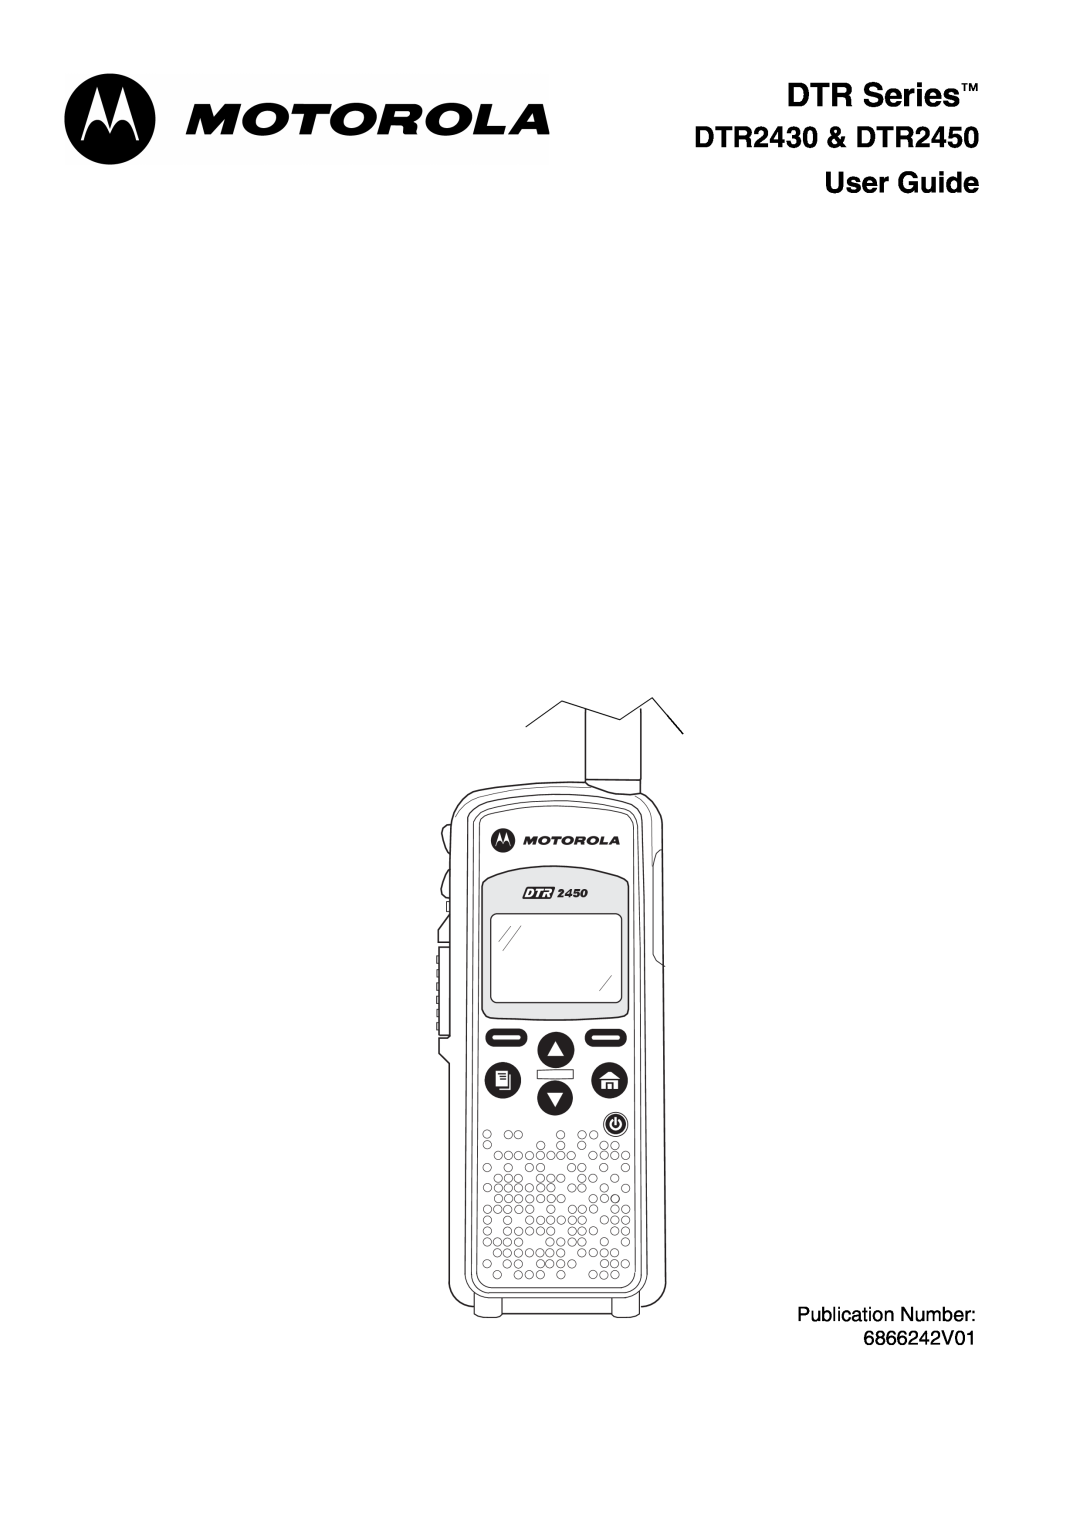 Motorola manual DTR Series, DTR2430 & DTR2450, User Guide, Publication Number, Title 